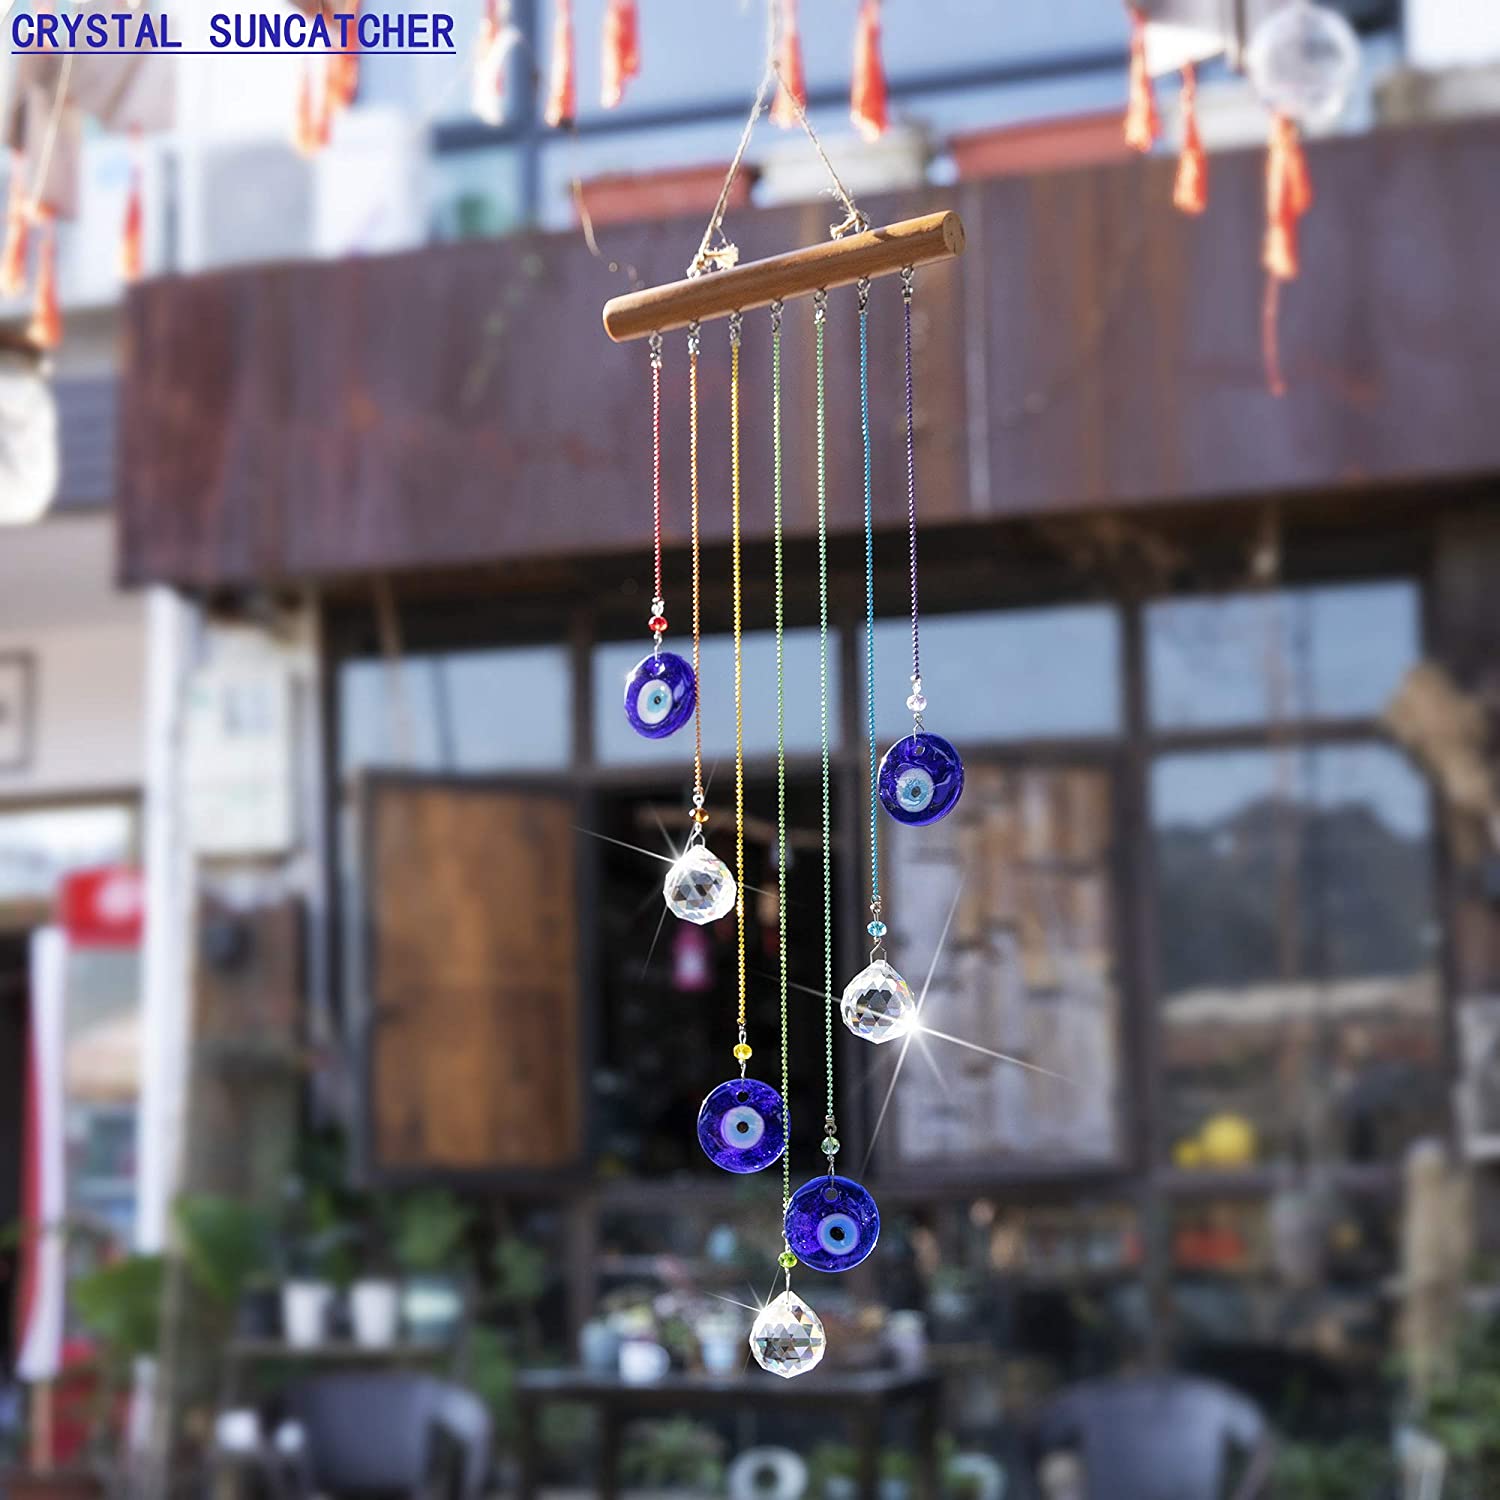 Hanging Crystals Suncatcher Ornament Turkish Blue Evil Eye Decor Crystal Ball Prisms Rainbow Maker Pendant for Window Garden